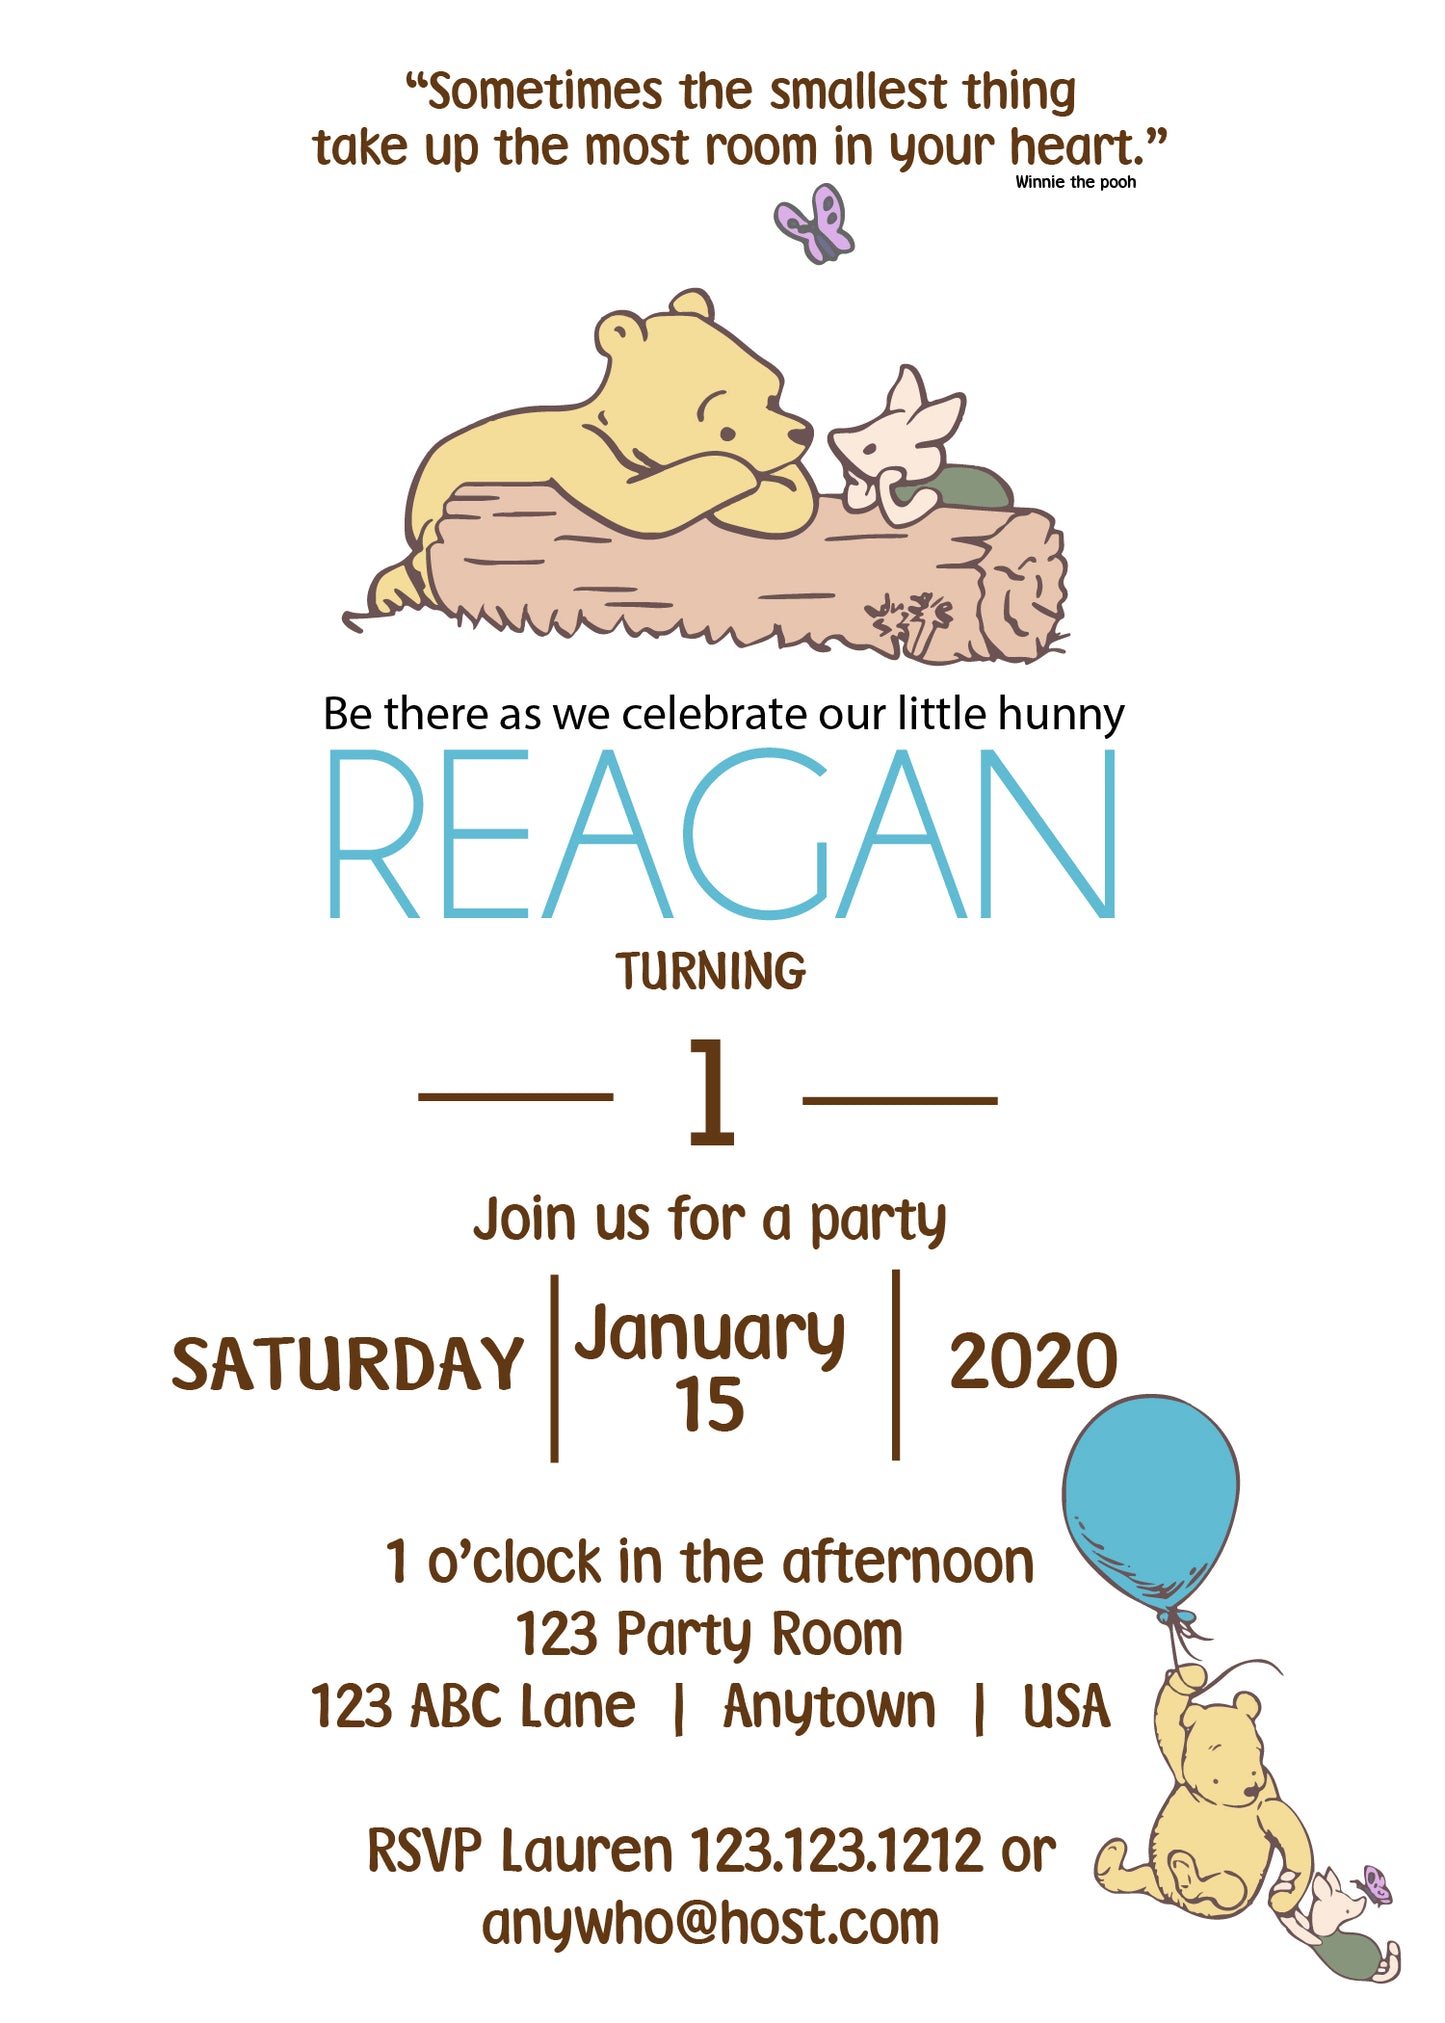 Classic Bear Pooh Party Invitation Boy - PG101-B - Invitetique